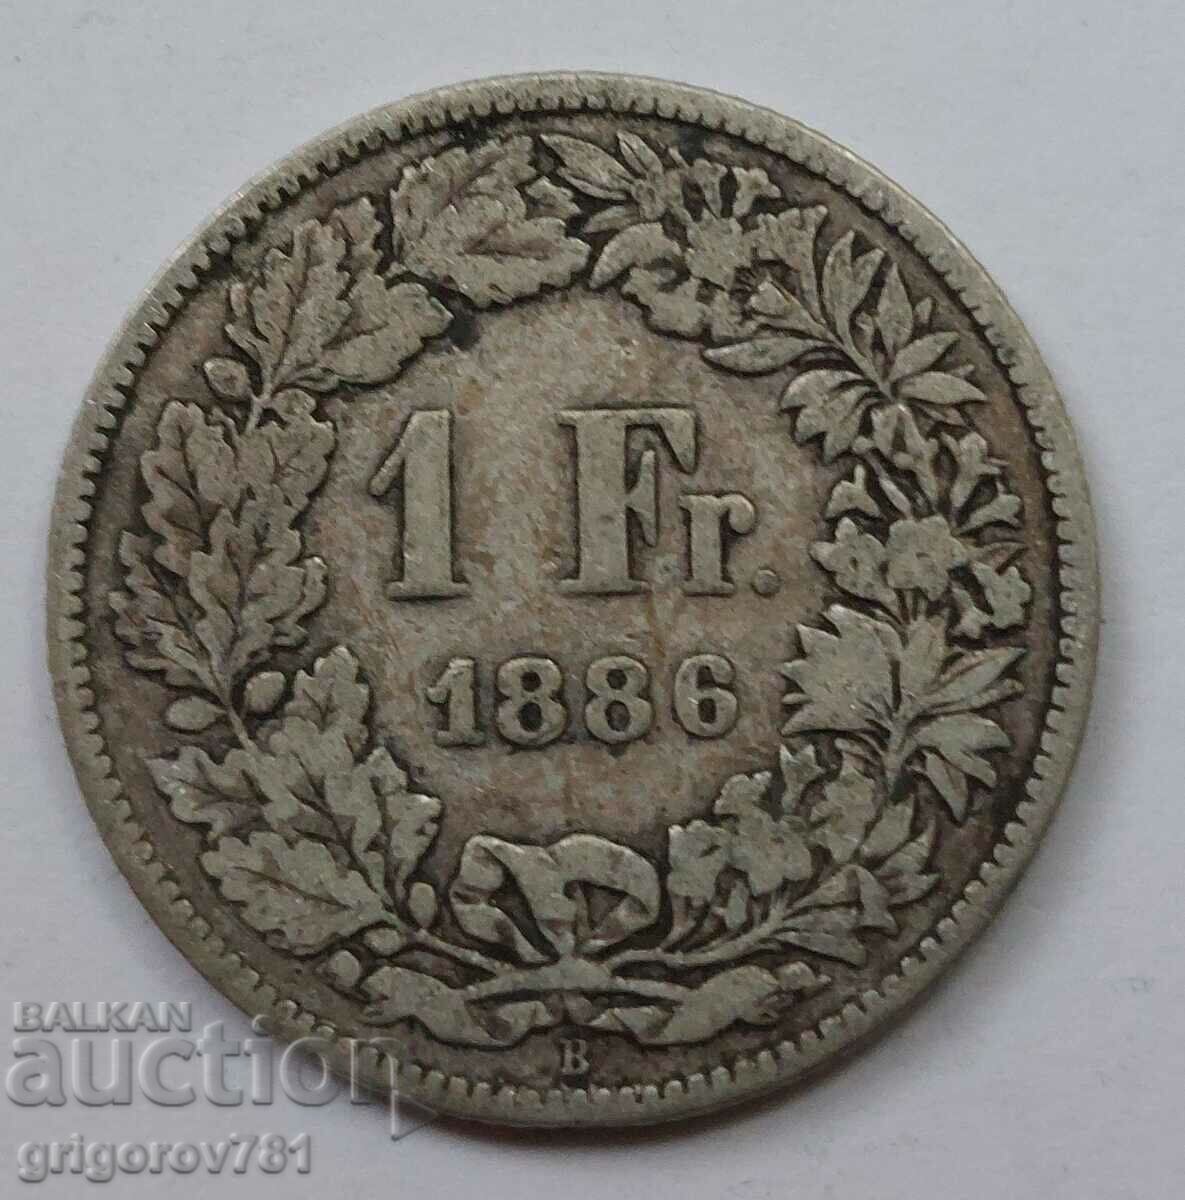 1 Franc Silver Switzerland 1886 B - Silver Coin #2